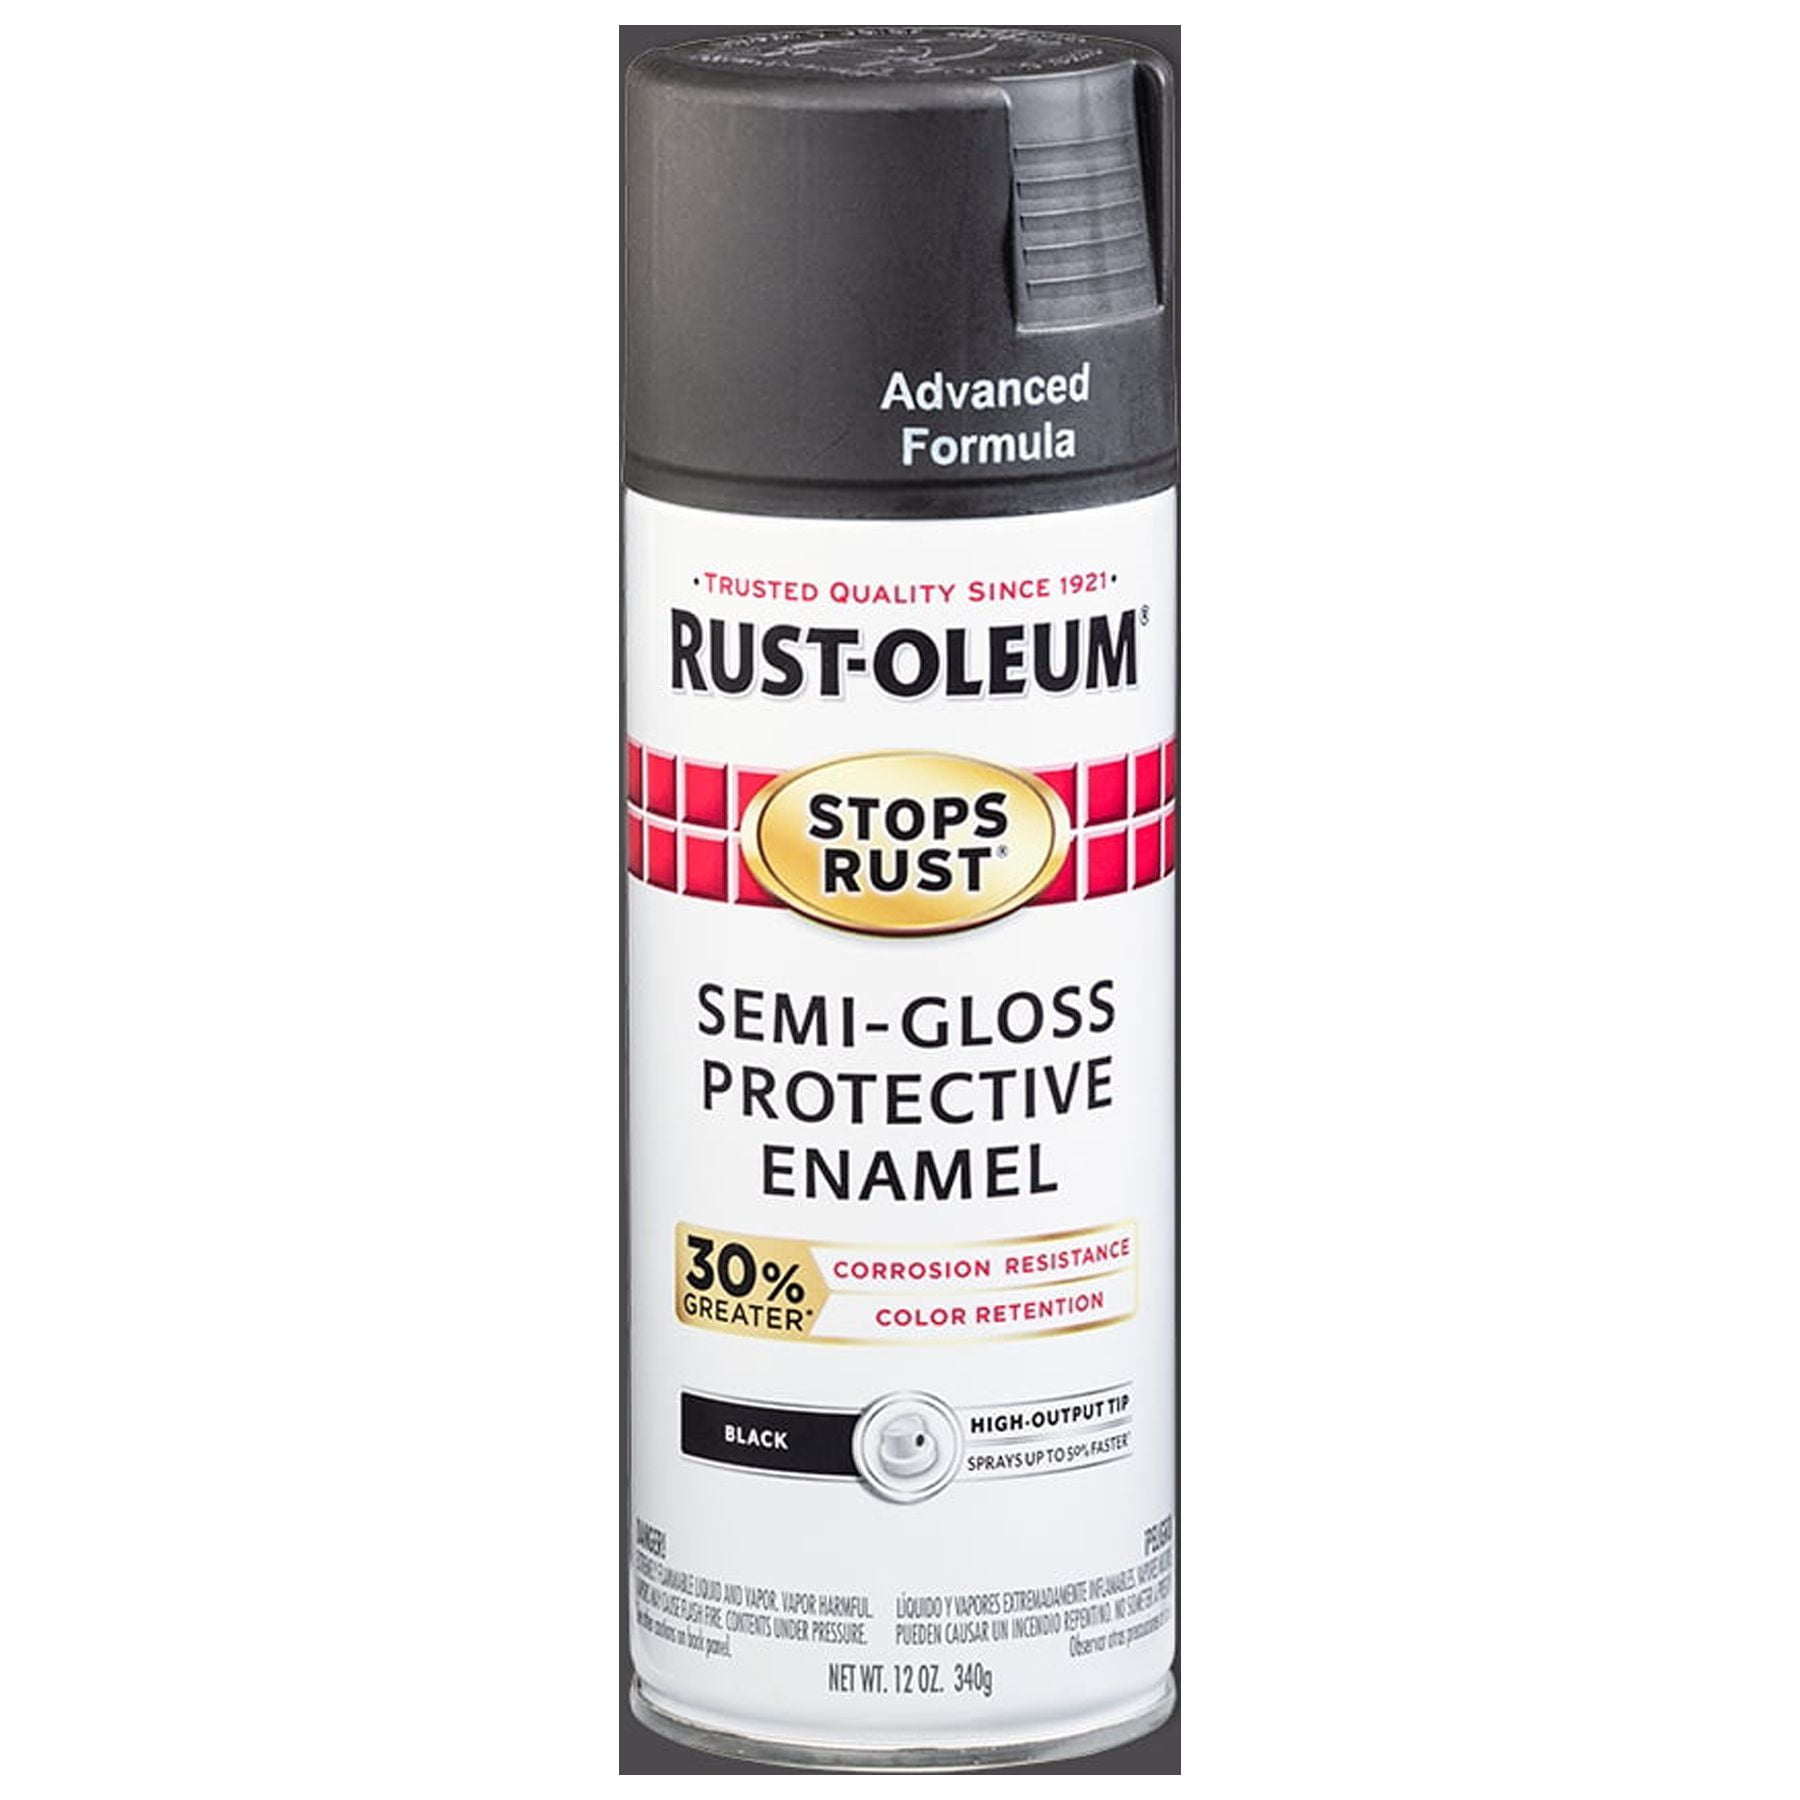 Rust-Oleum 7992830-6PK Stone Creations Spray Paint, 12 oz, Gray Stone, 6  Pack 